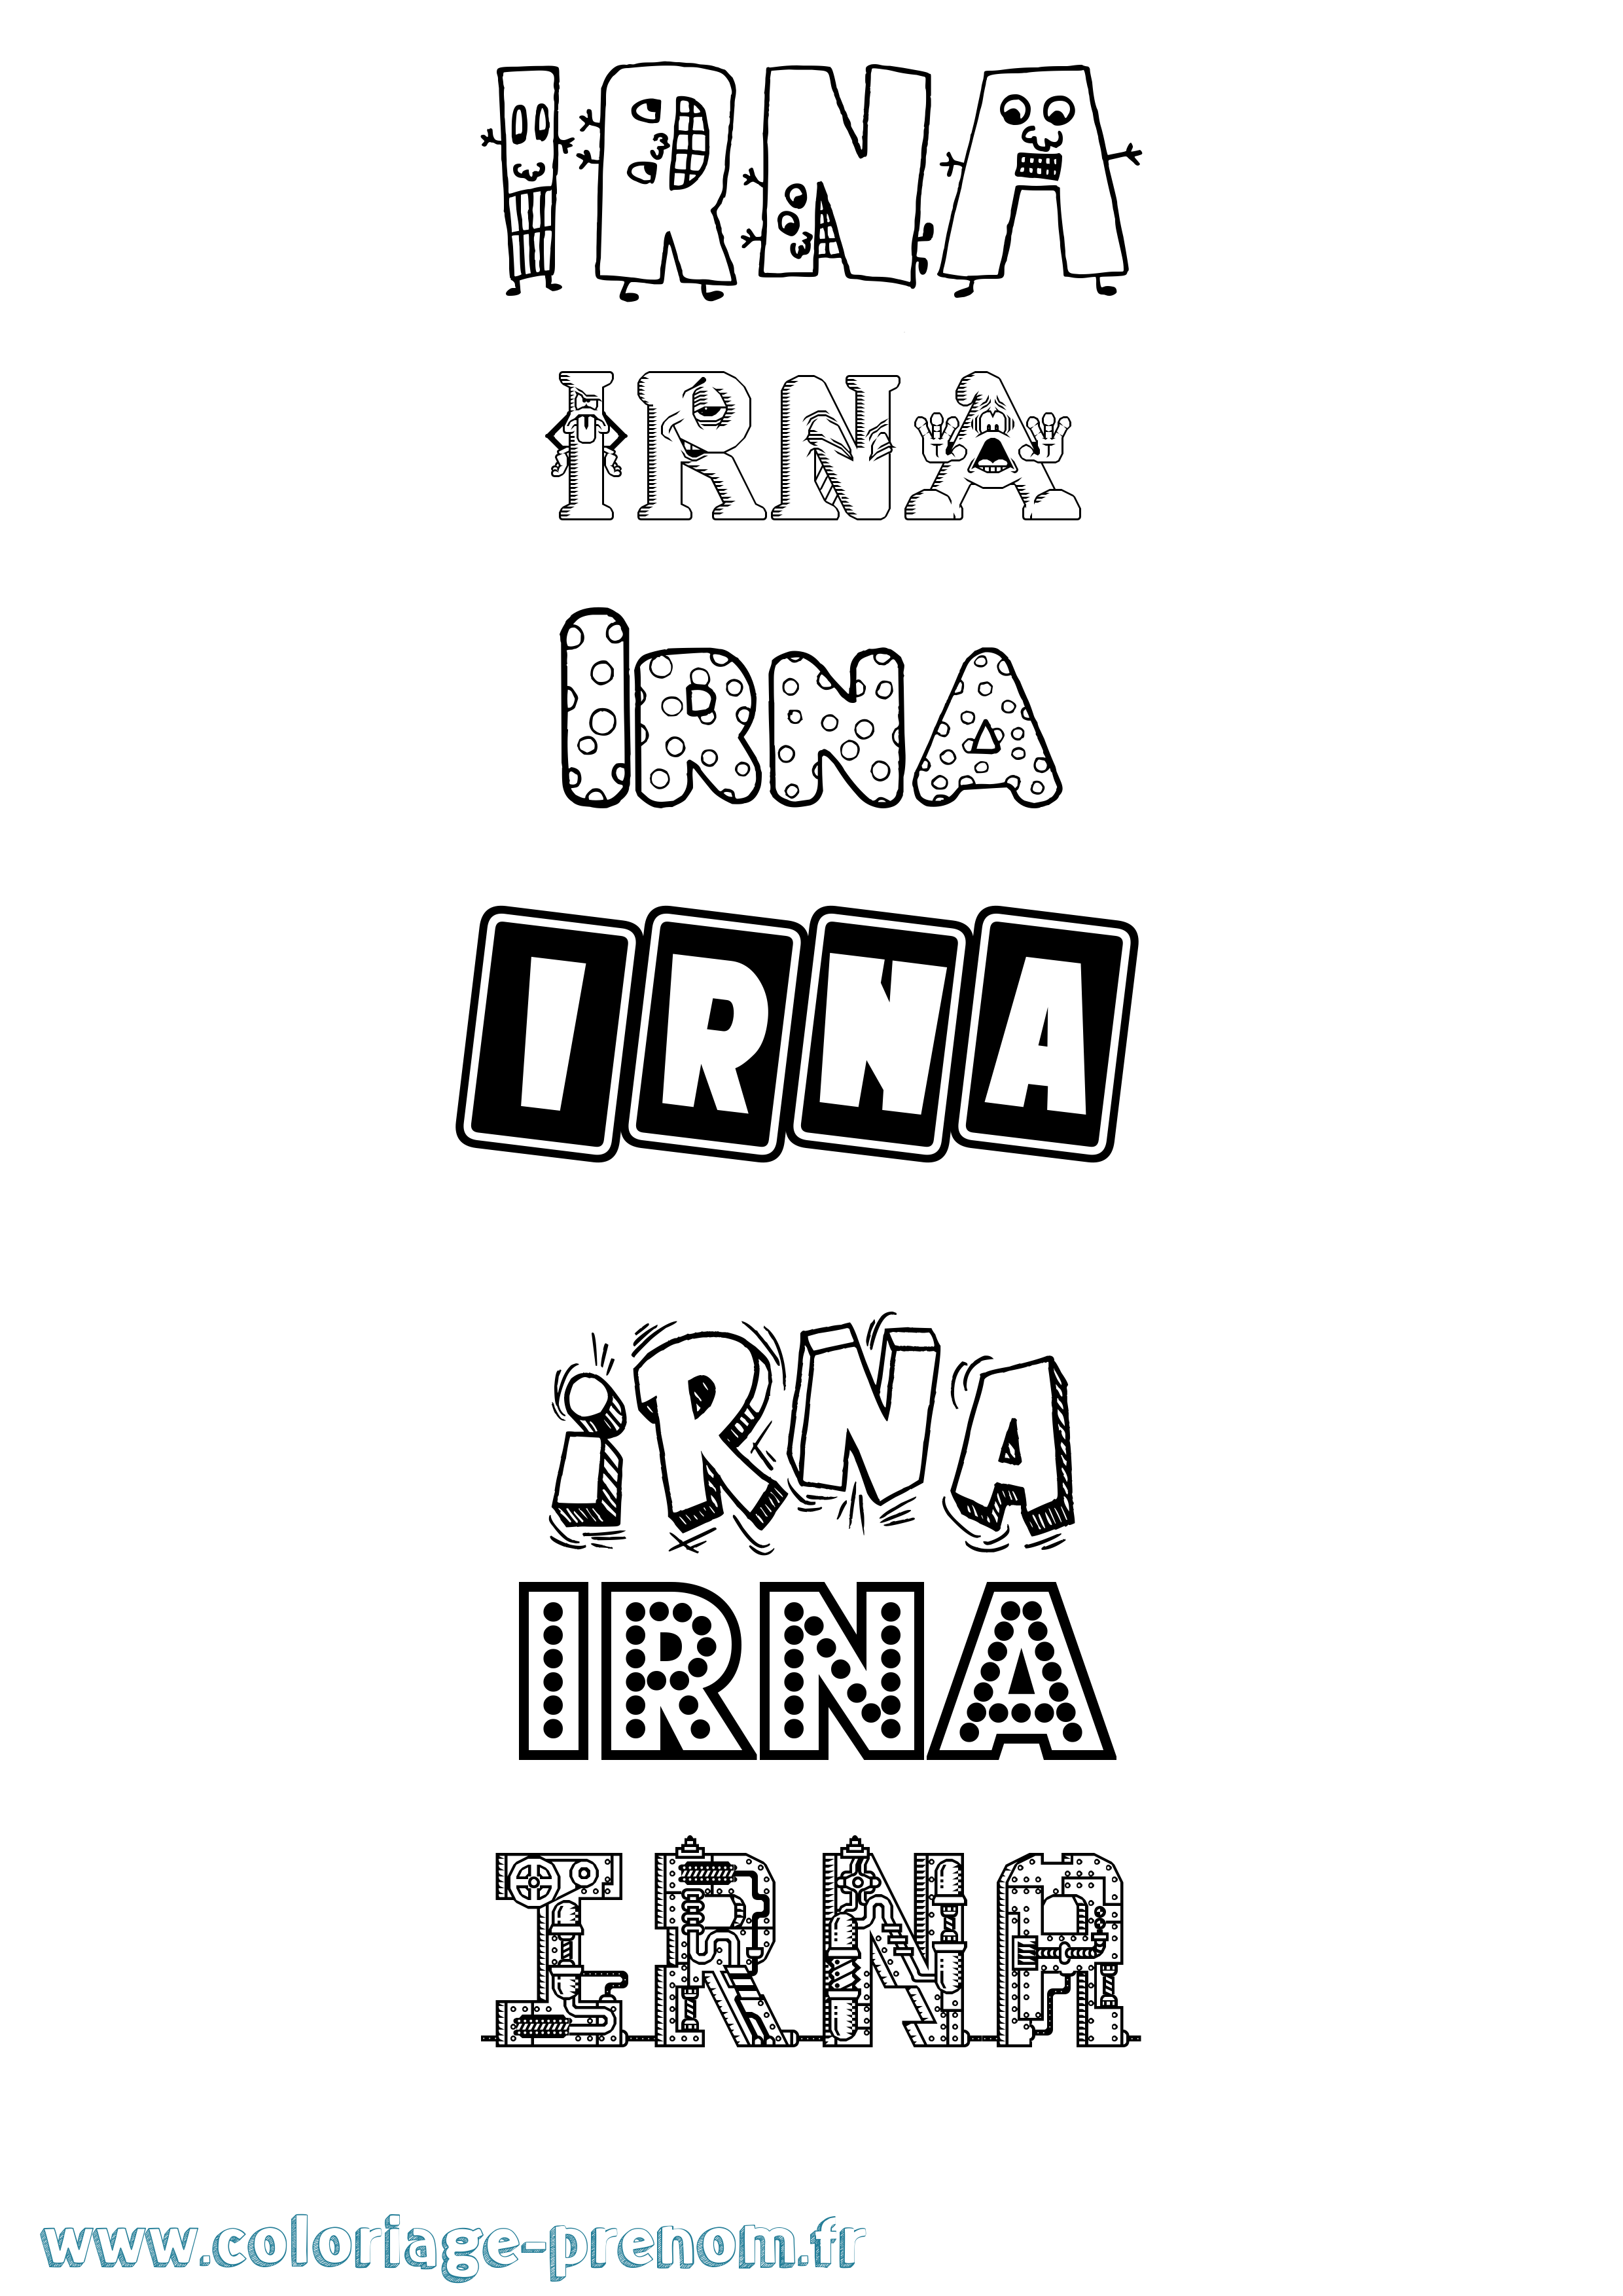 Coloriage prénom Irna Fun